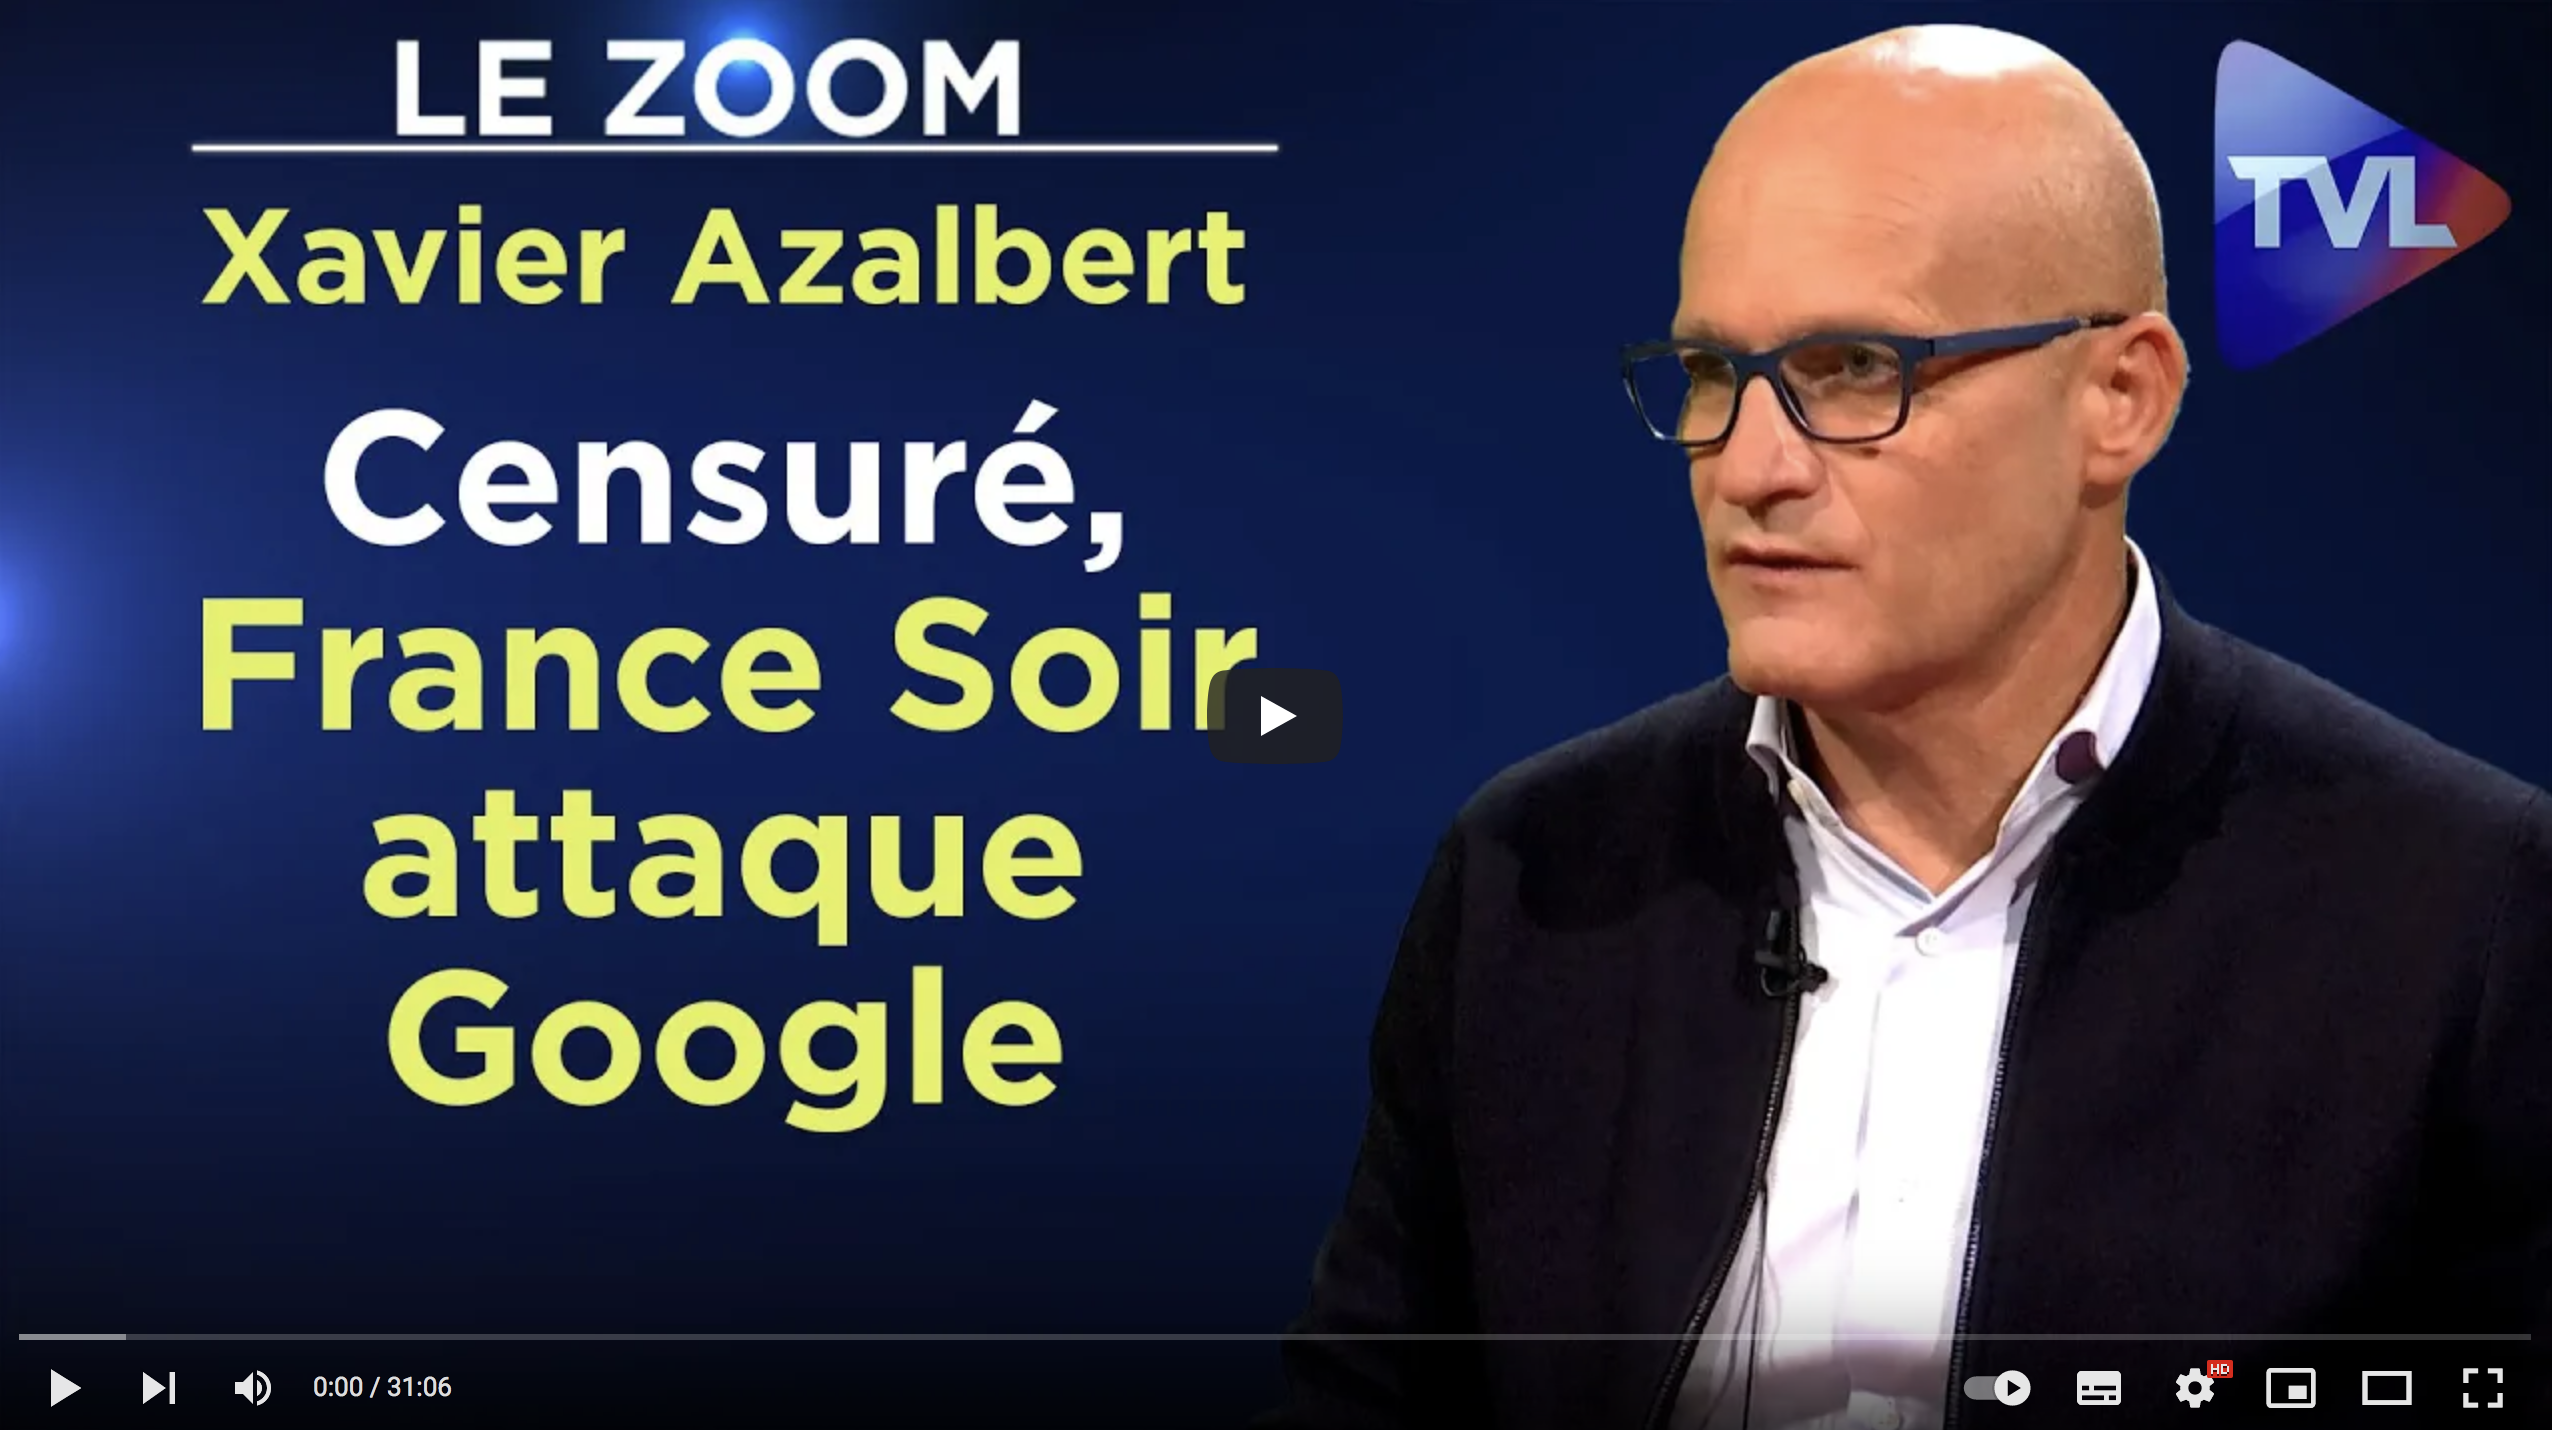 Censuré, France Soir attaque Google : entretien avec Xavier Azalbert (VIDÉO)